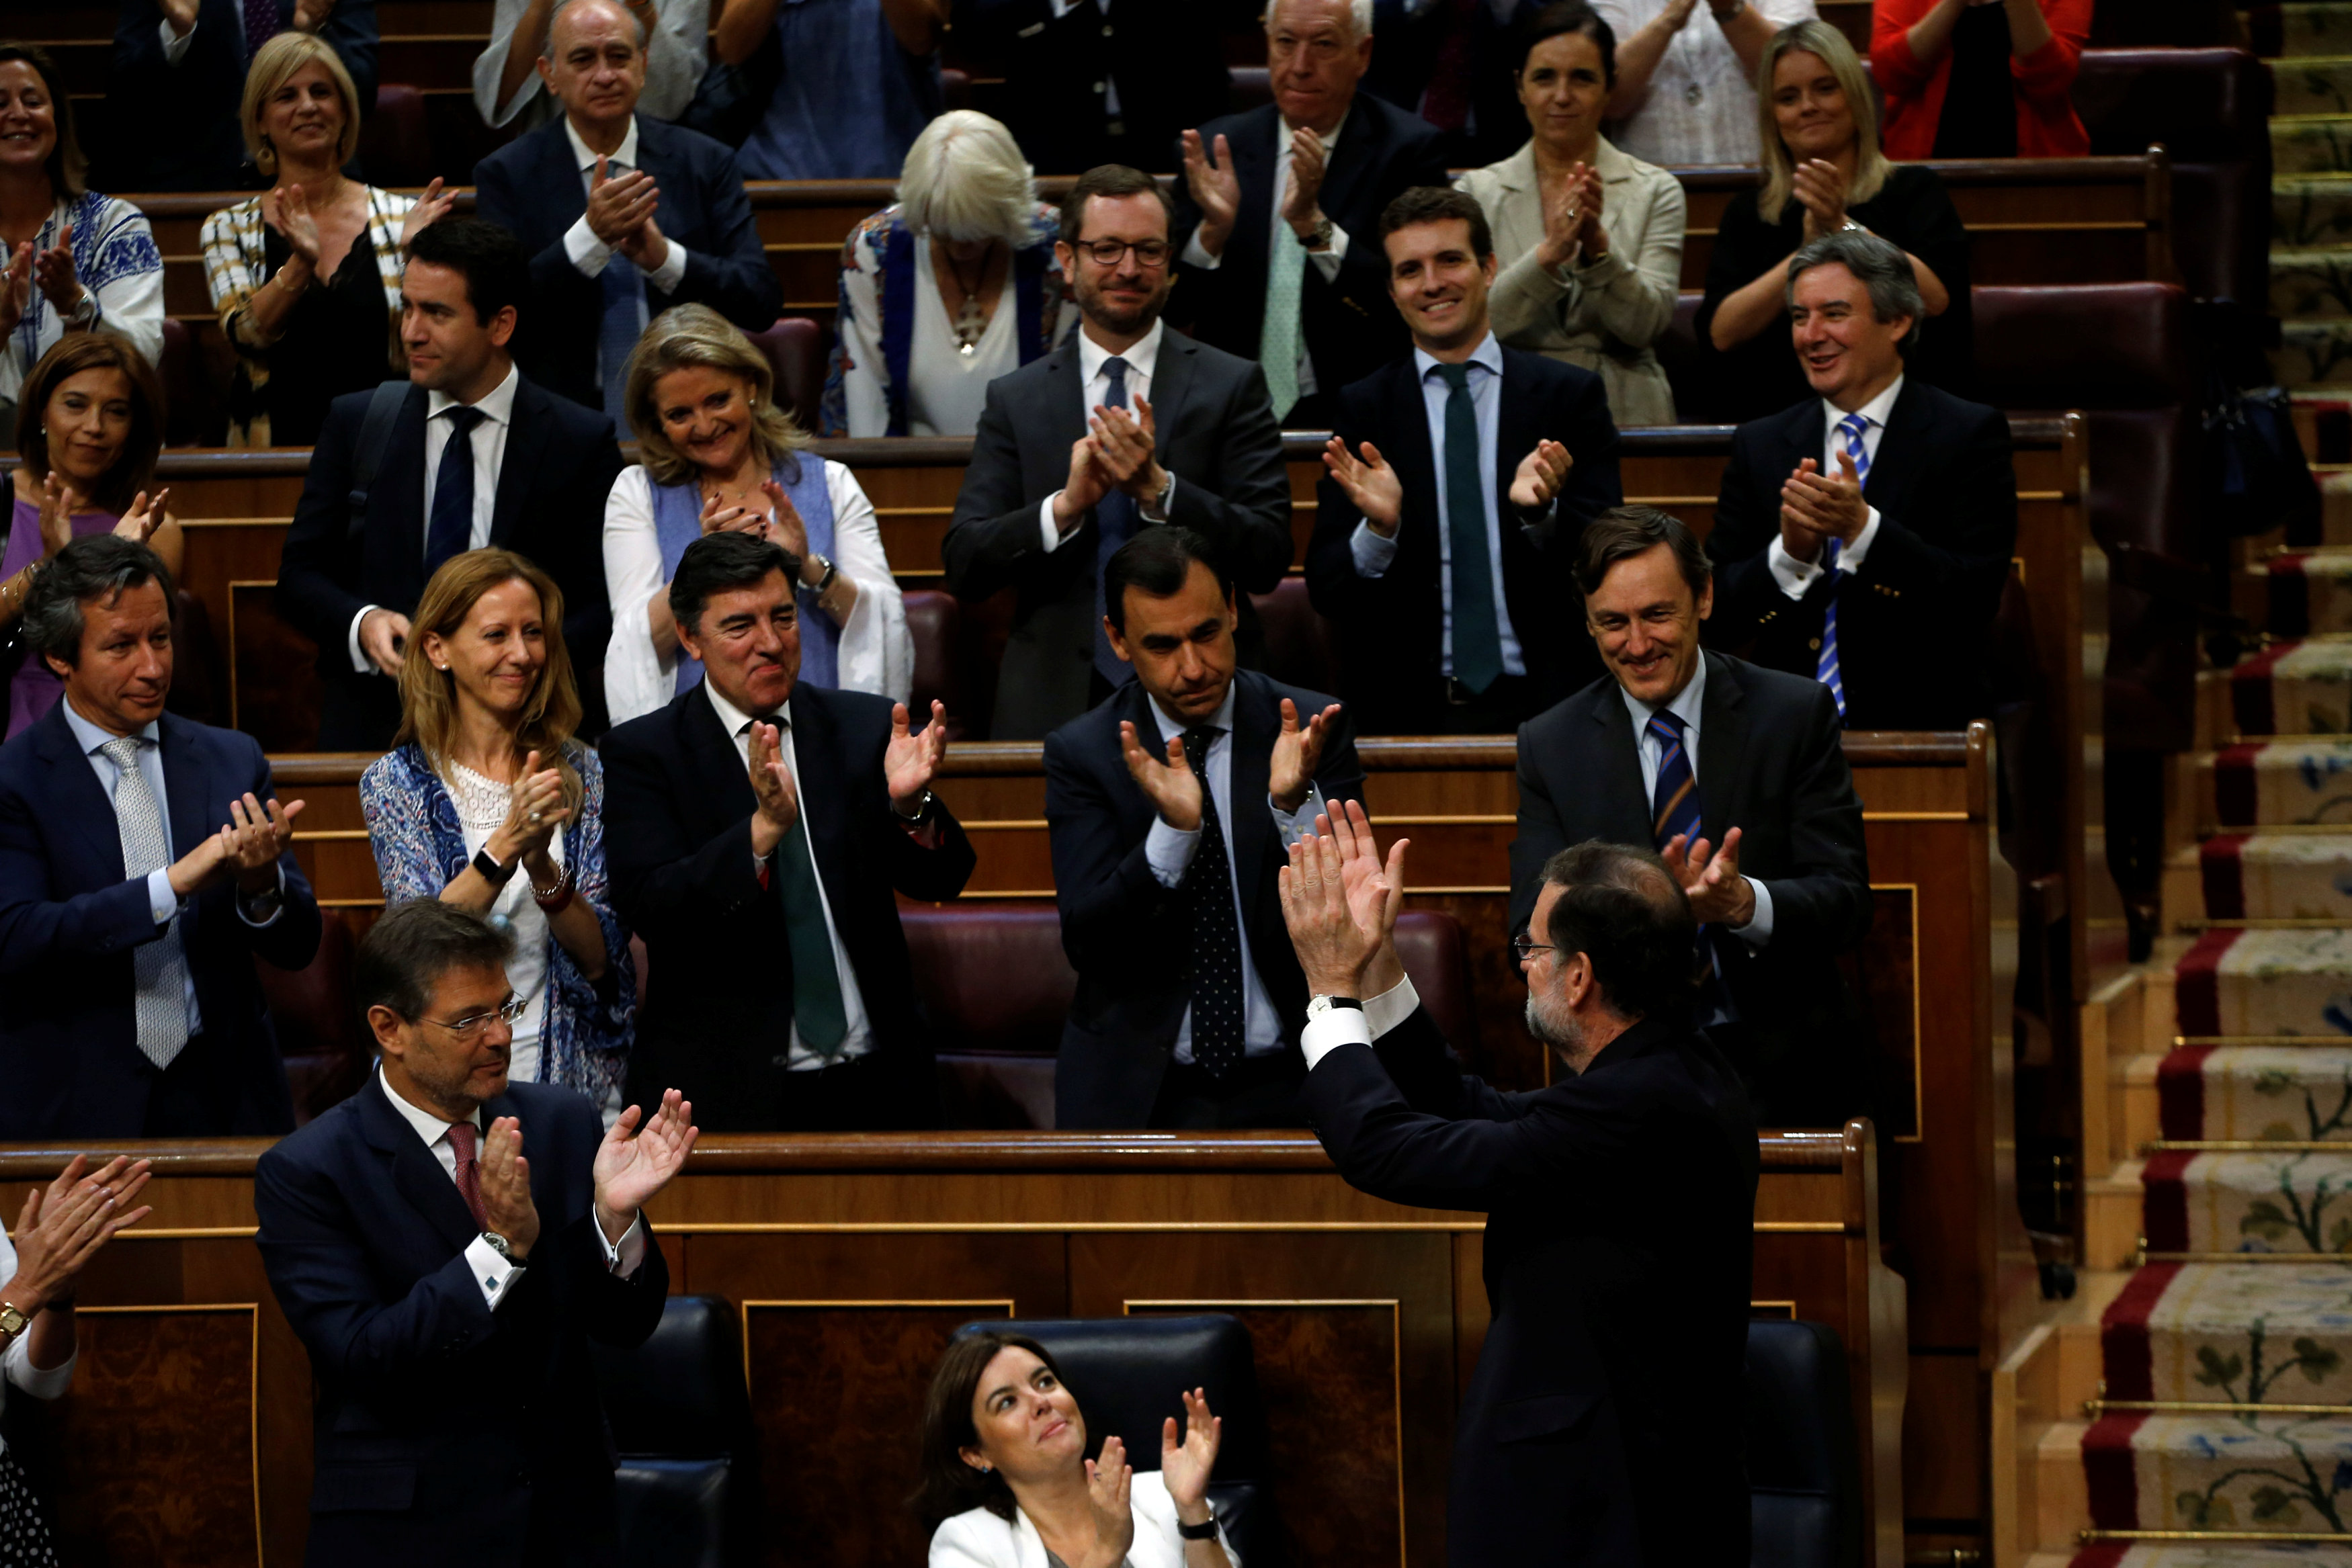 Spain's parliament rejects no-confidence motion against PM Rajoy